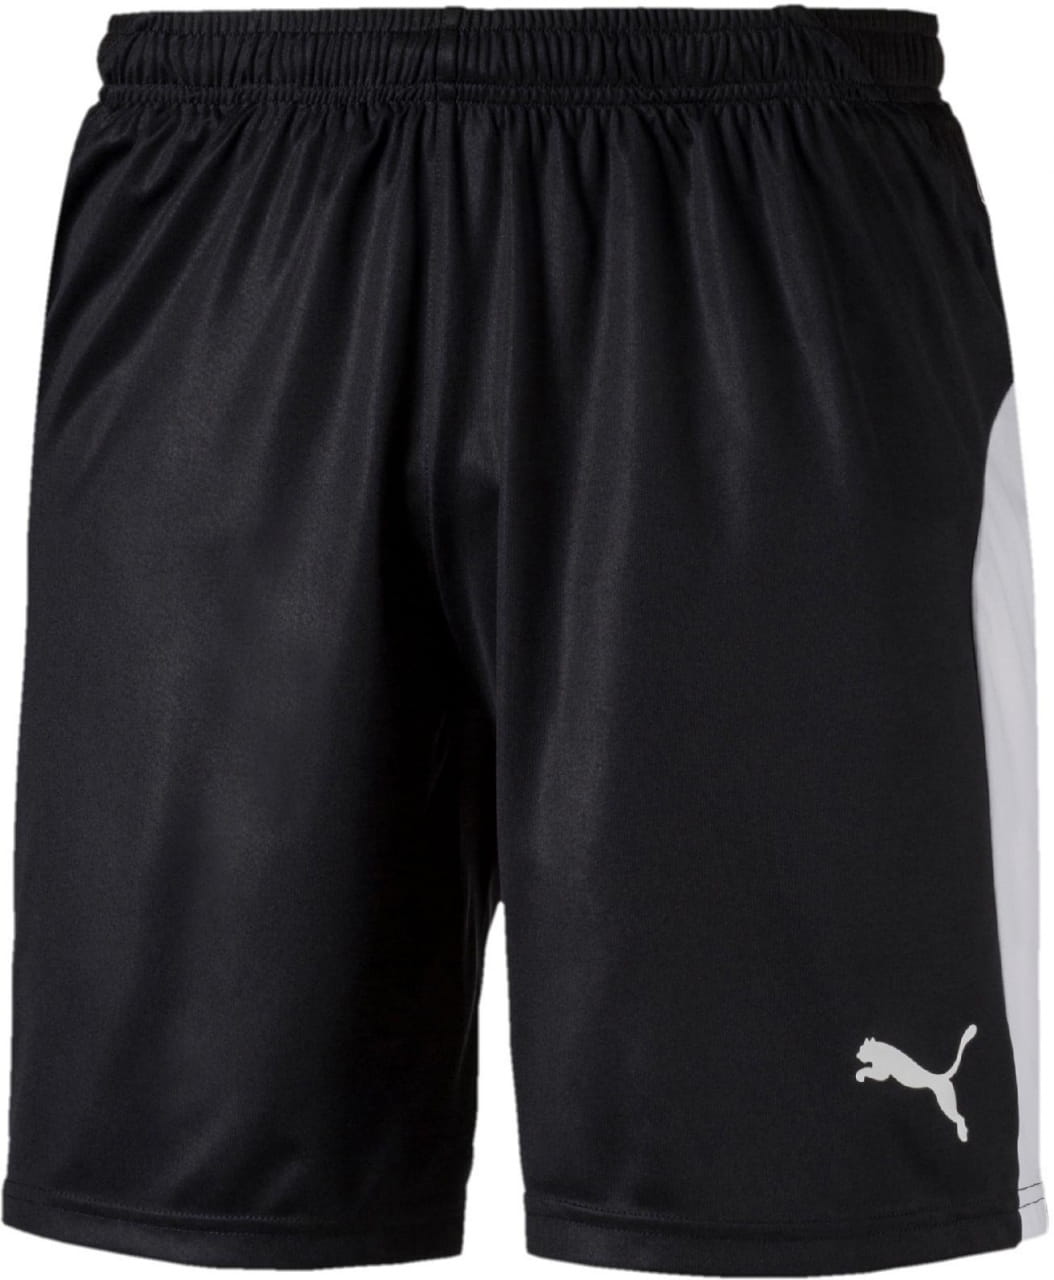 Sportshorts für Männer Puma LIGA Shorts